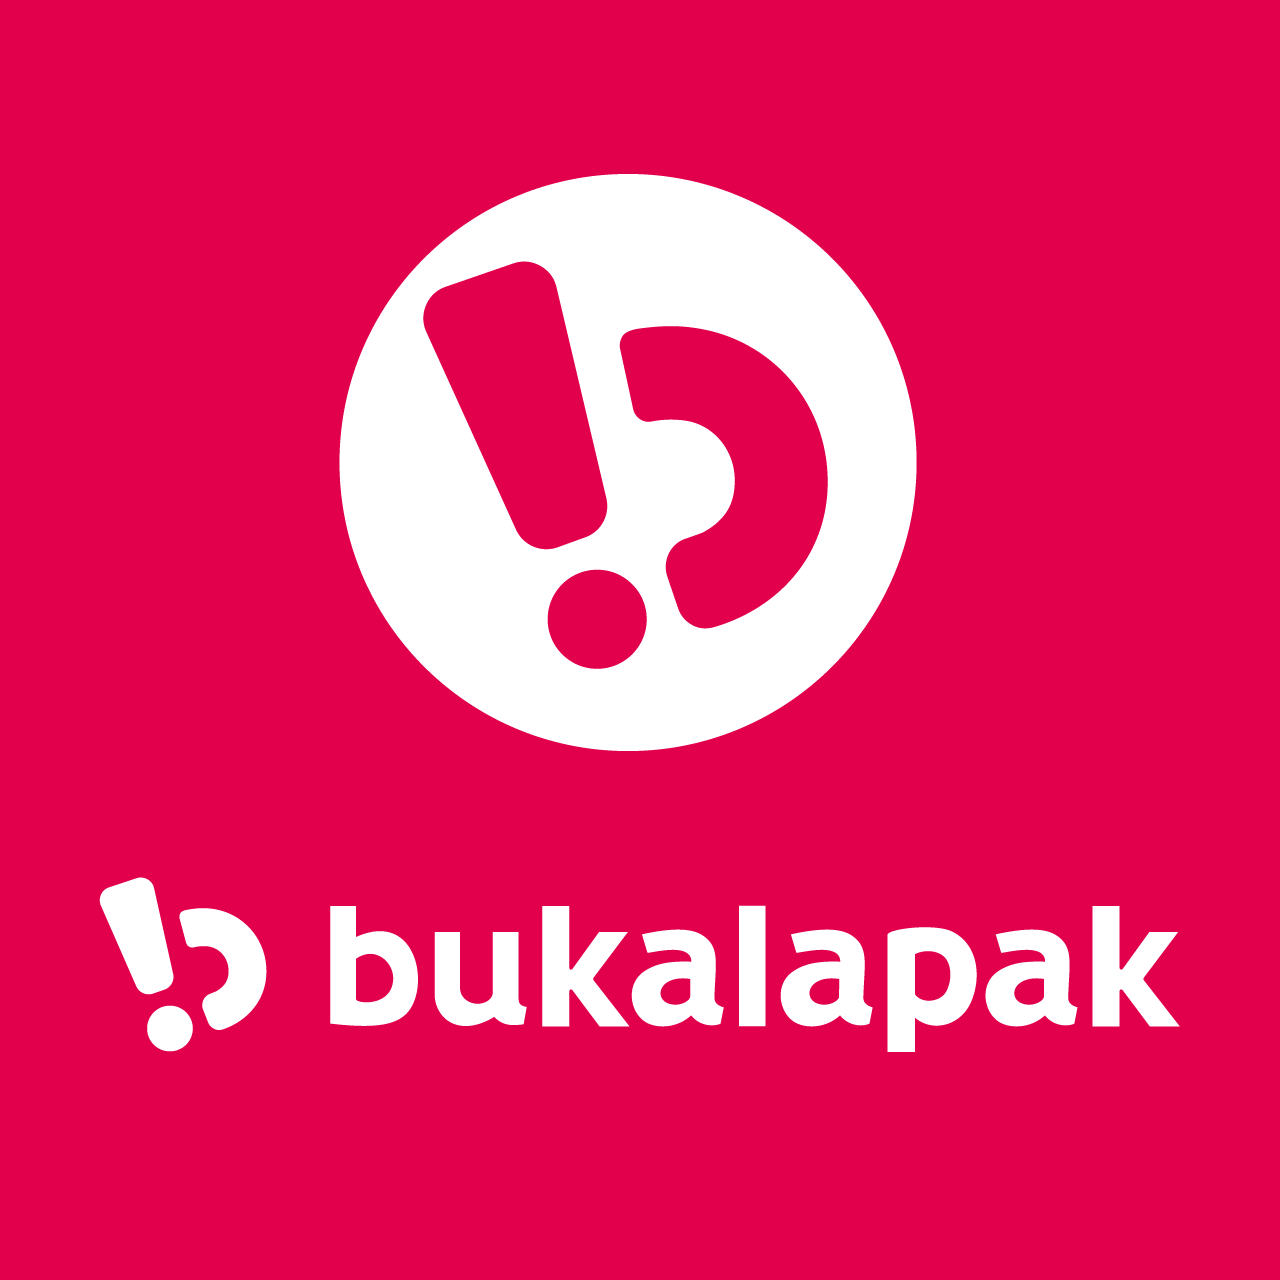 bukalapak Logo - Sribu Logo Design - Kontes Desain Logo ...